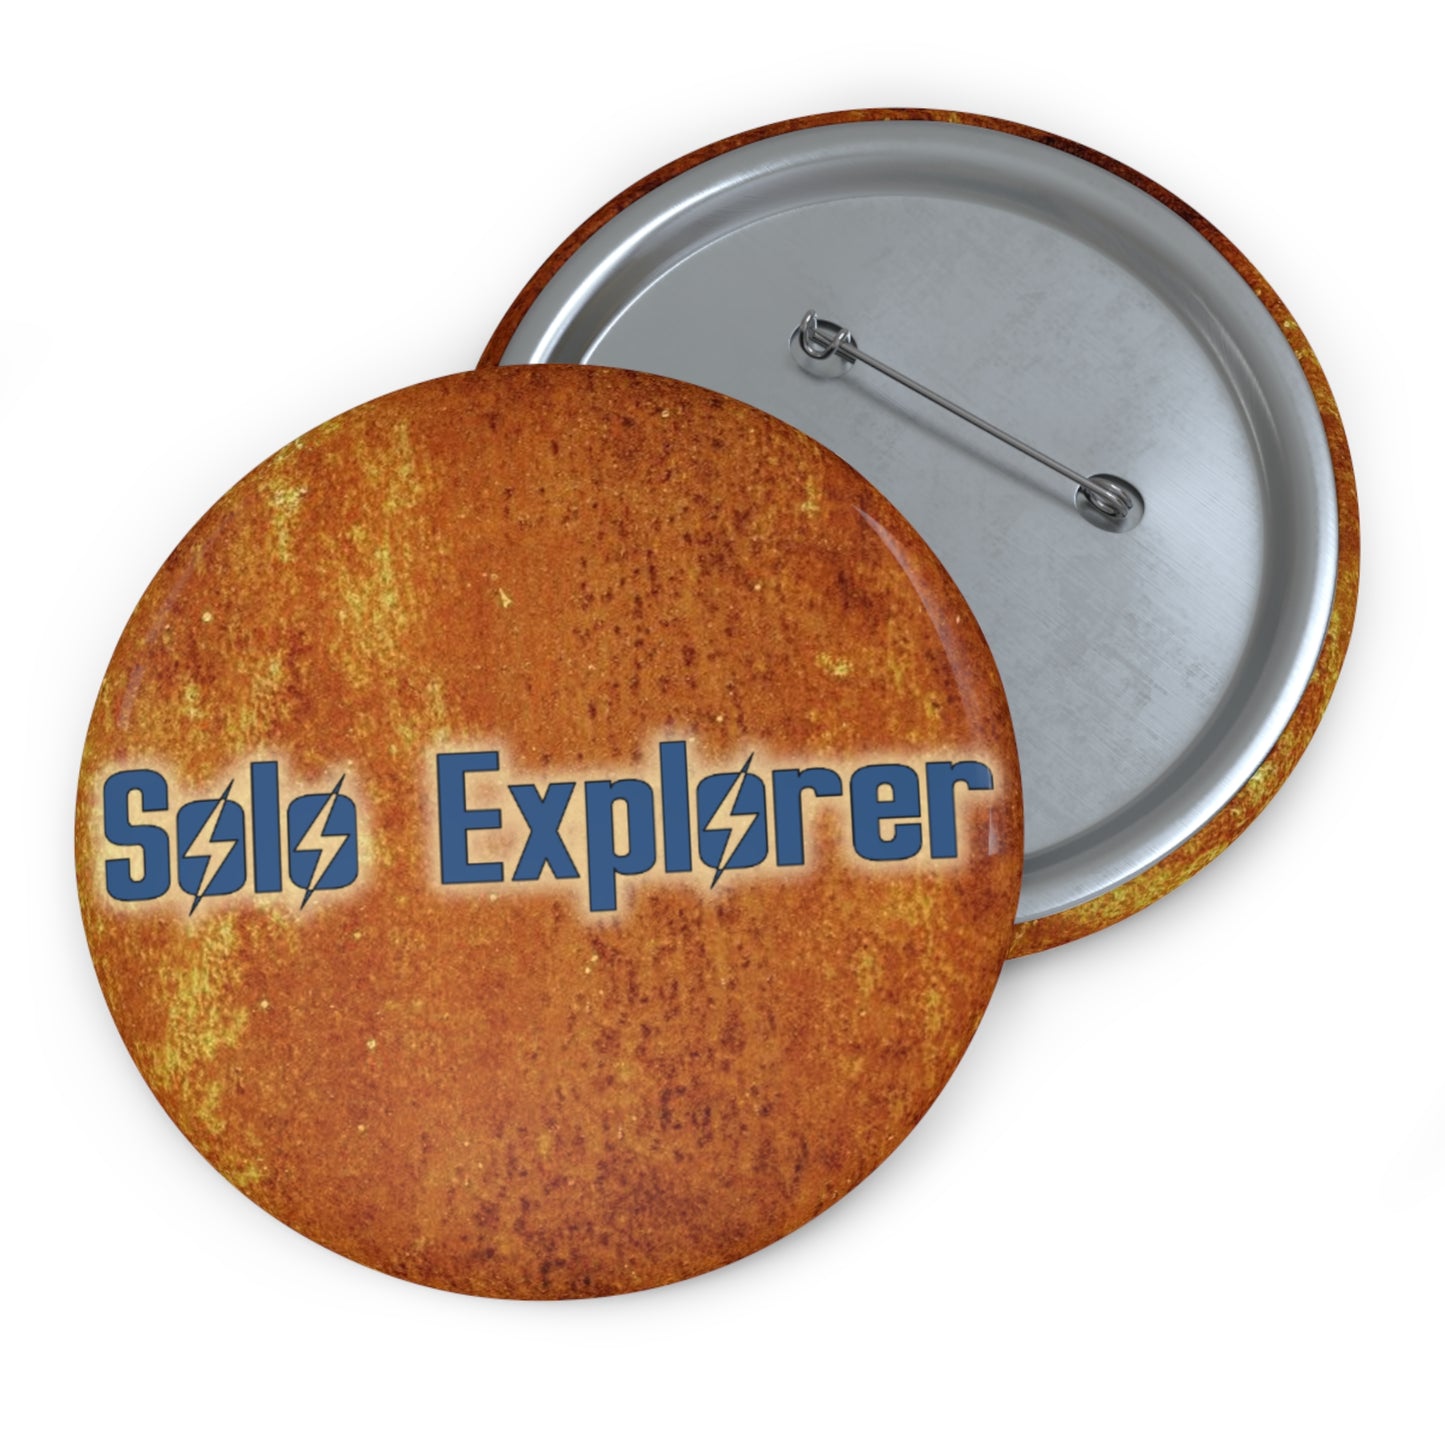 Solo Explorer Pin Buttons